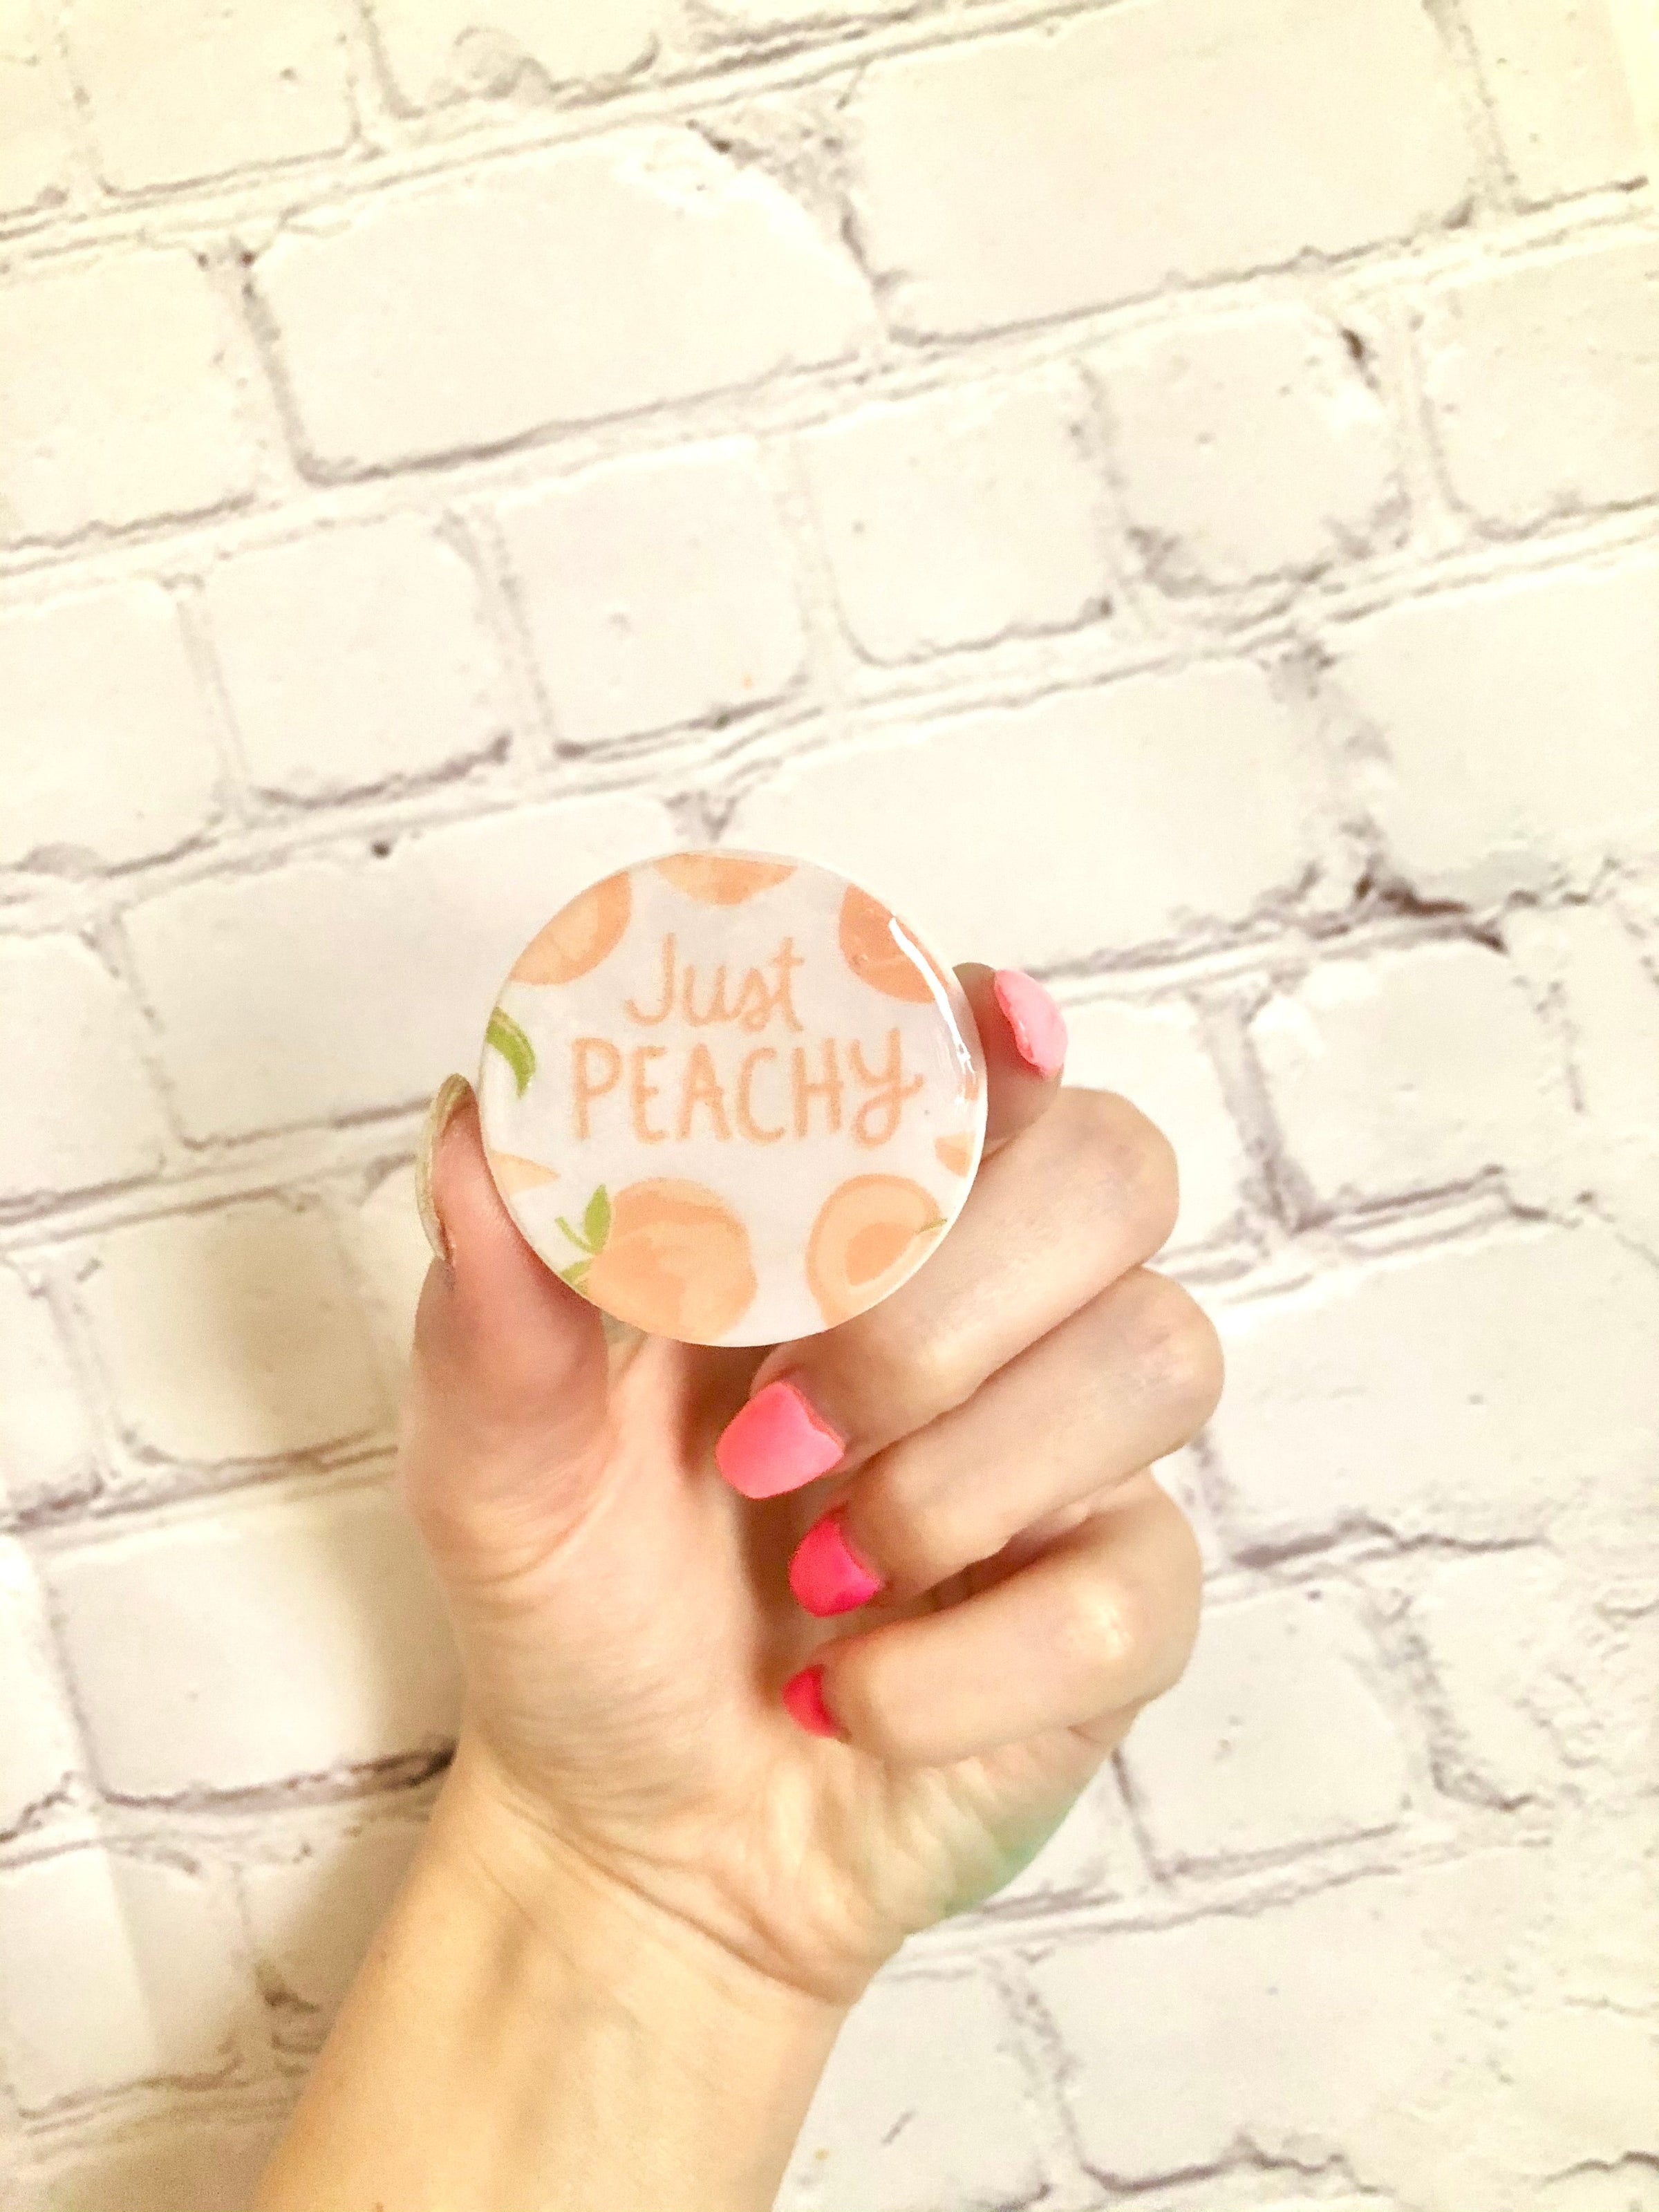 Just peachy Phone grip